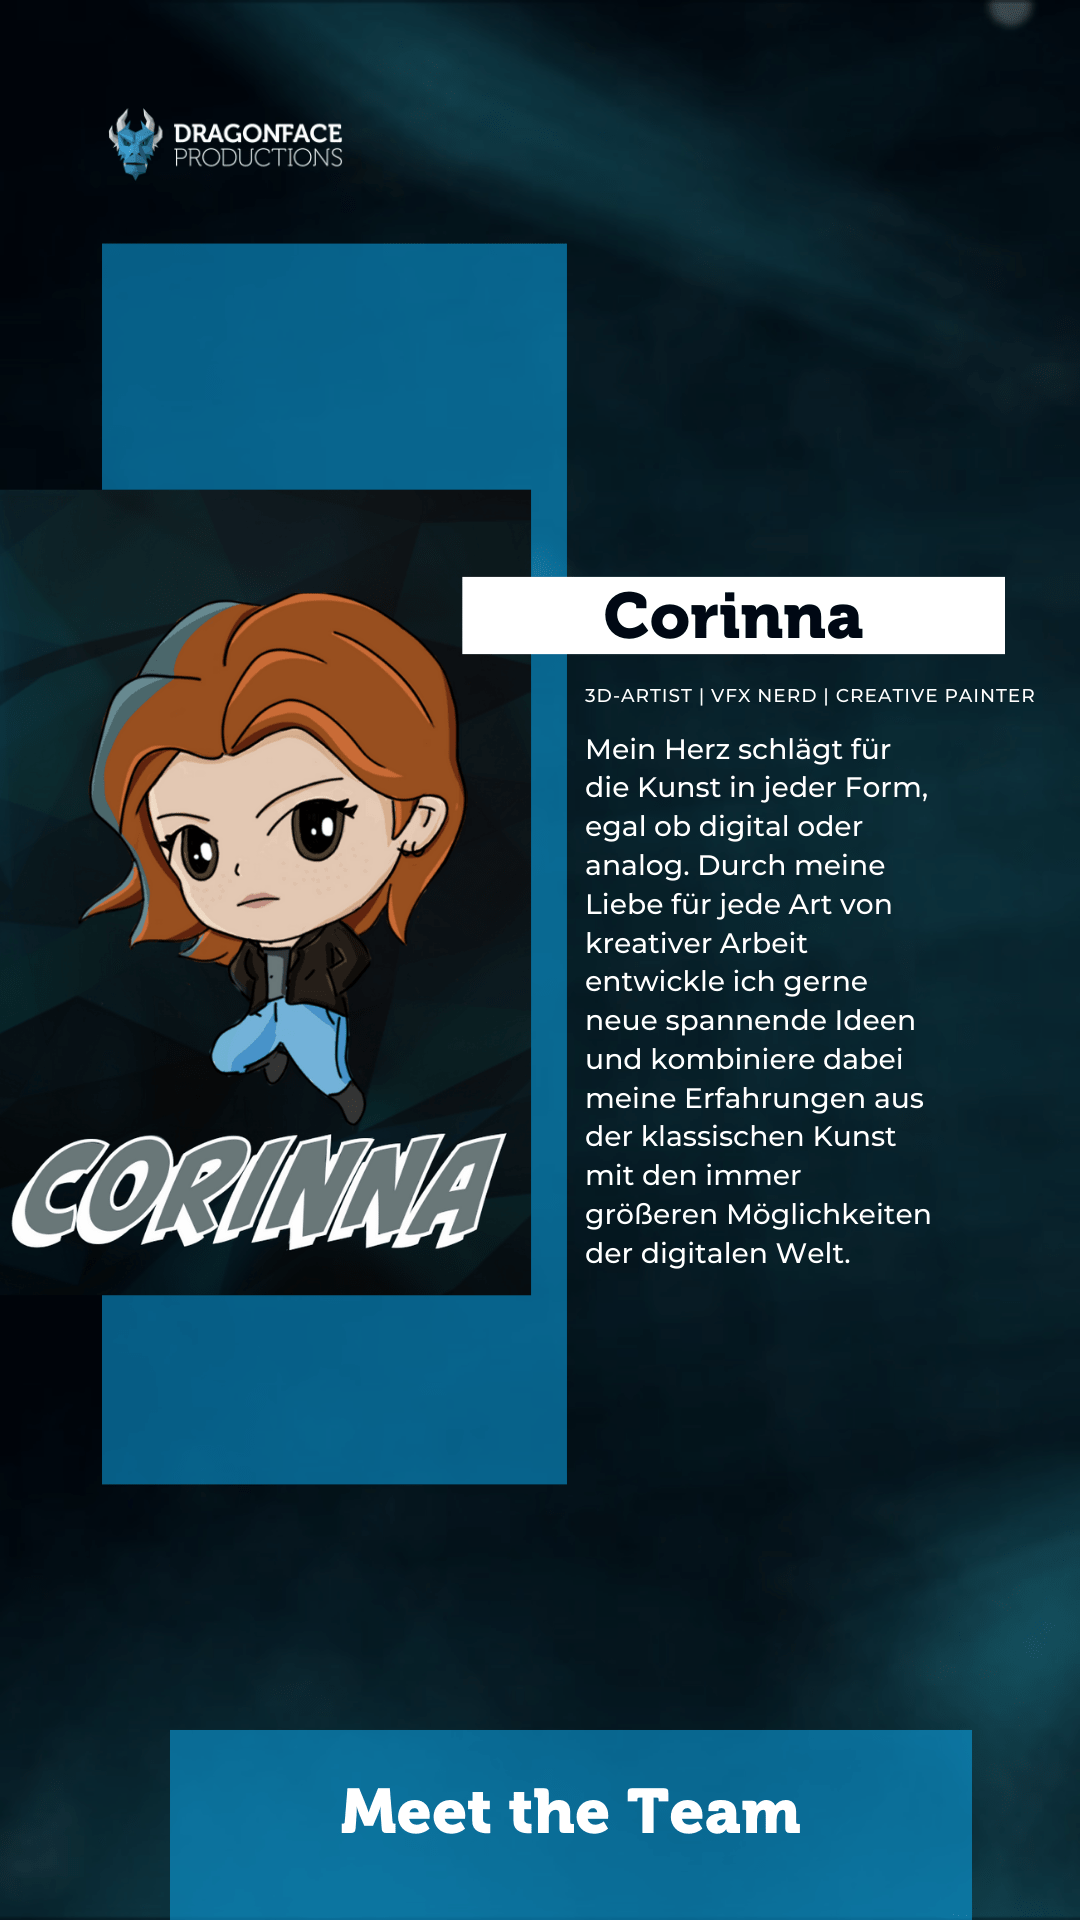 Team Corinna